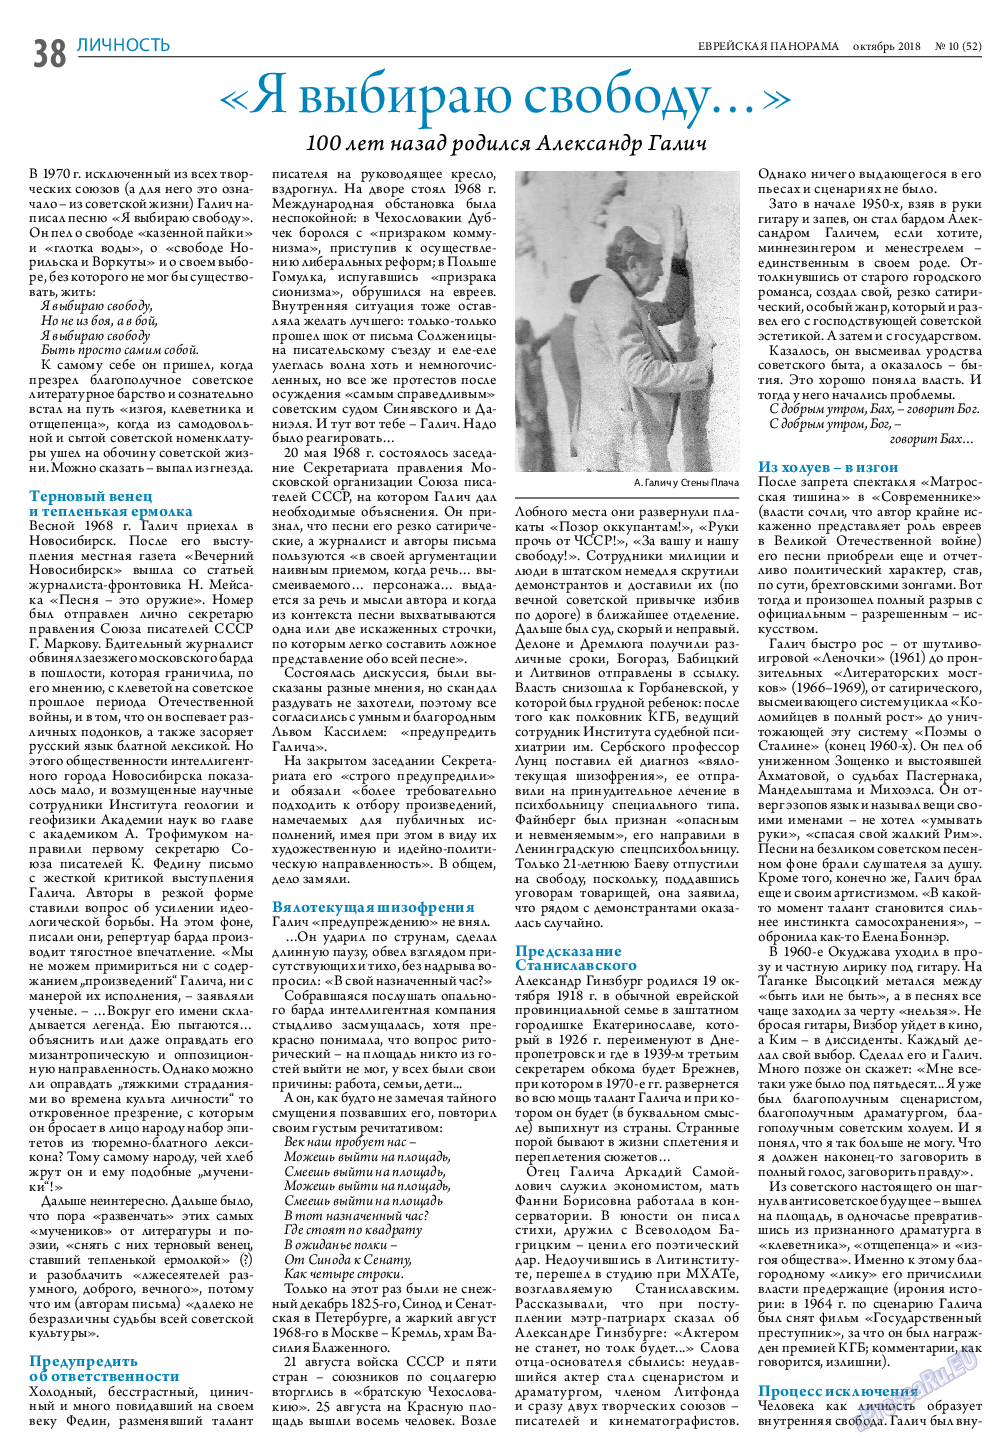 Еврейская панорама, газета. 2018 №10 стр.38